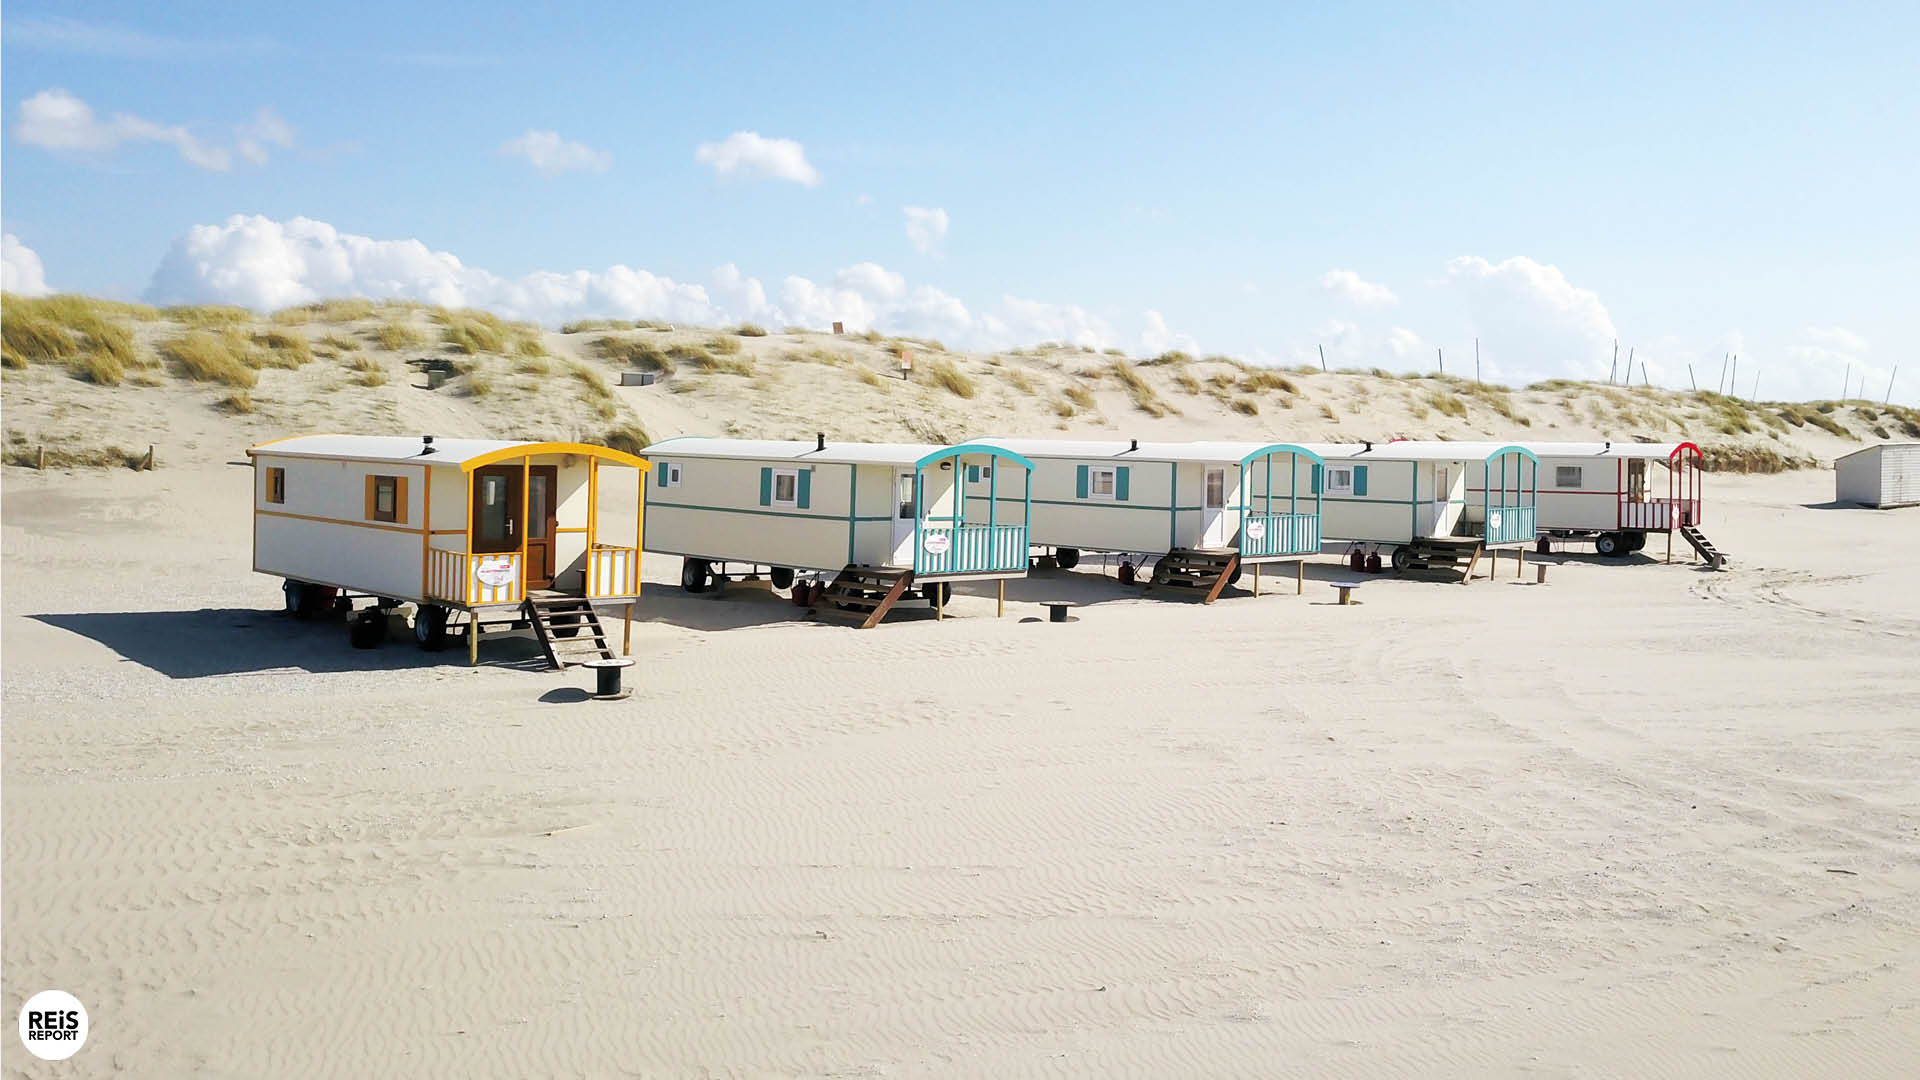 pipowagen op strand nederland huisje